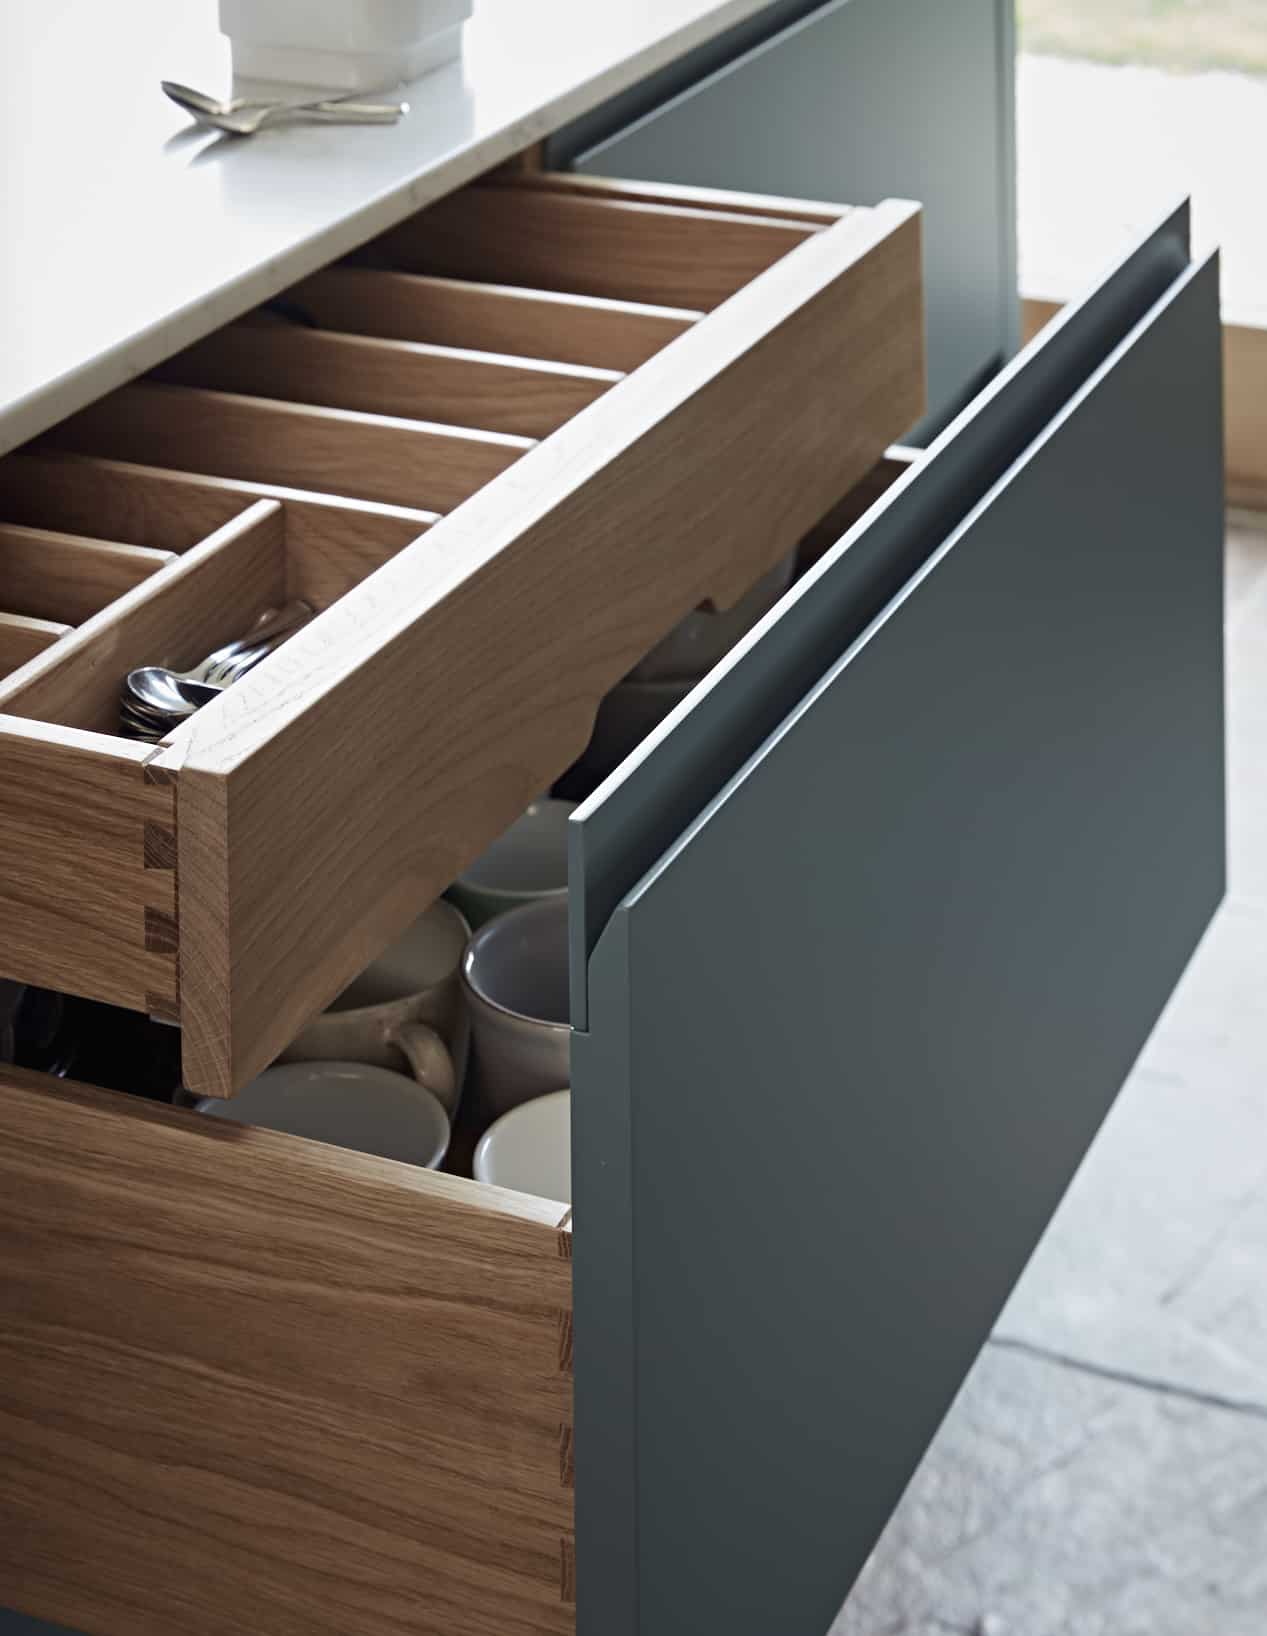 John Lewis of Hungerford bespoke modern kitchen drawer with extra storage options